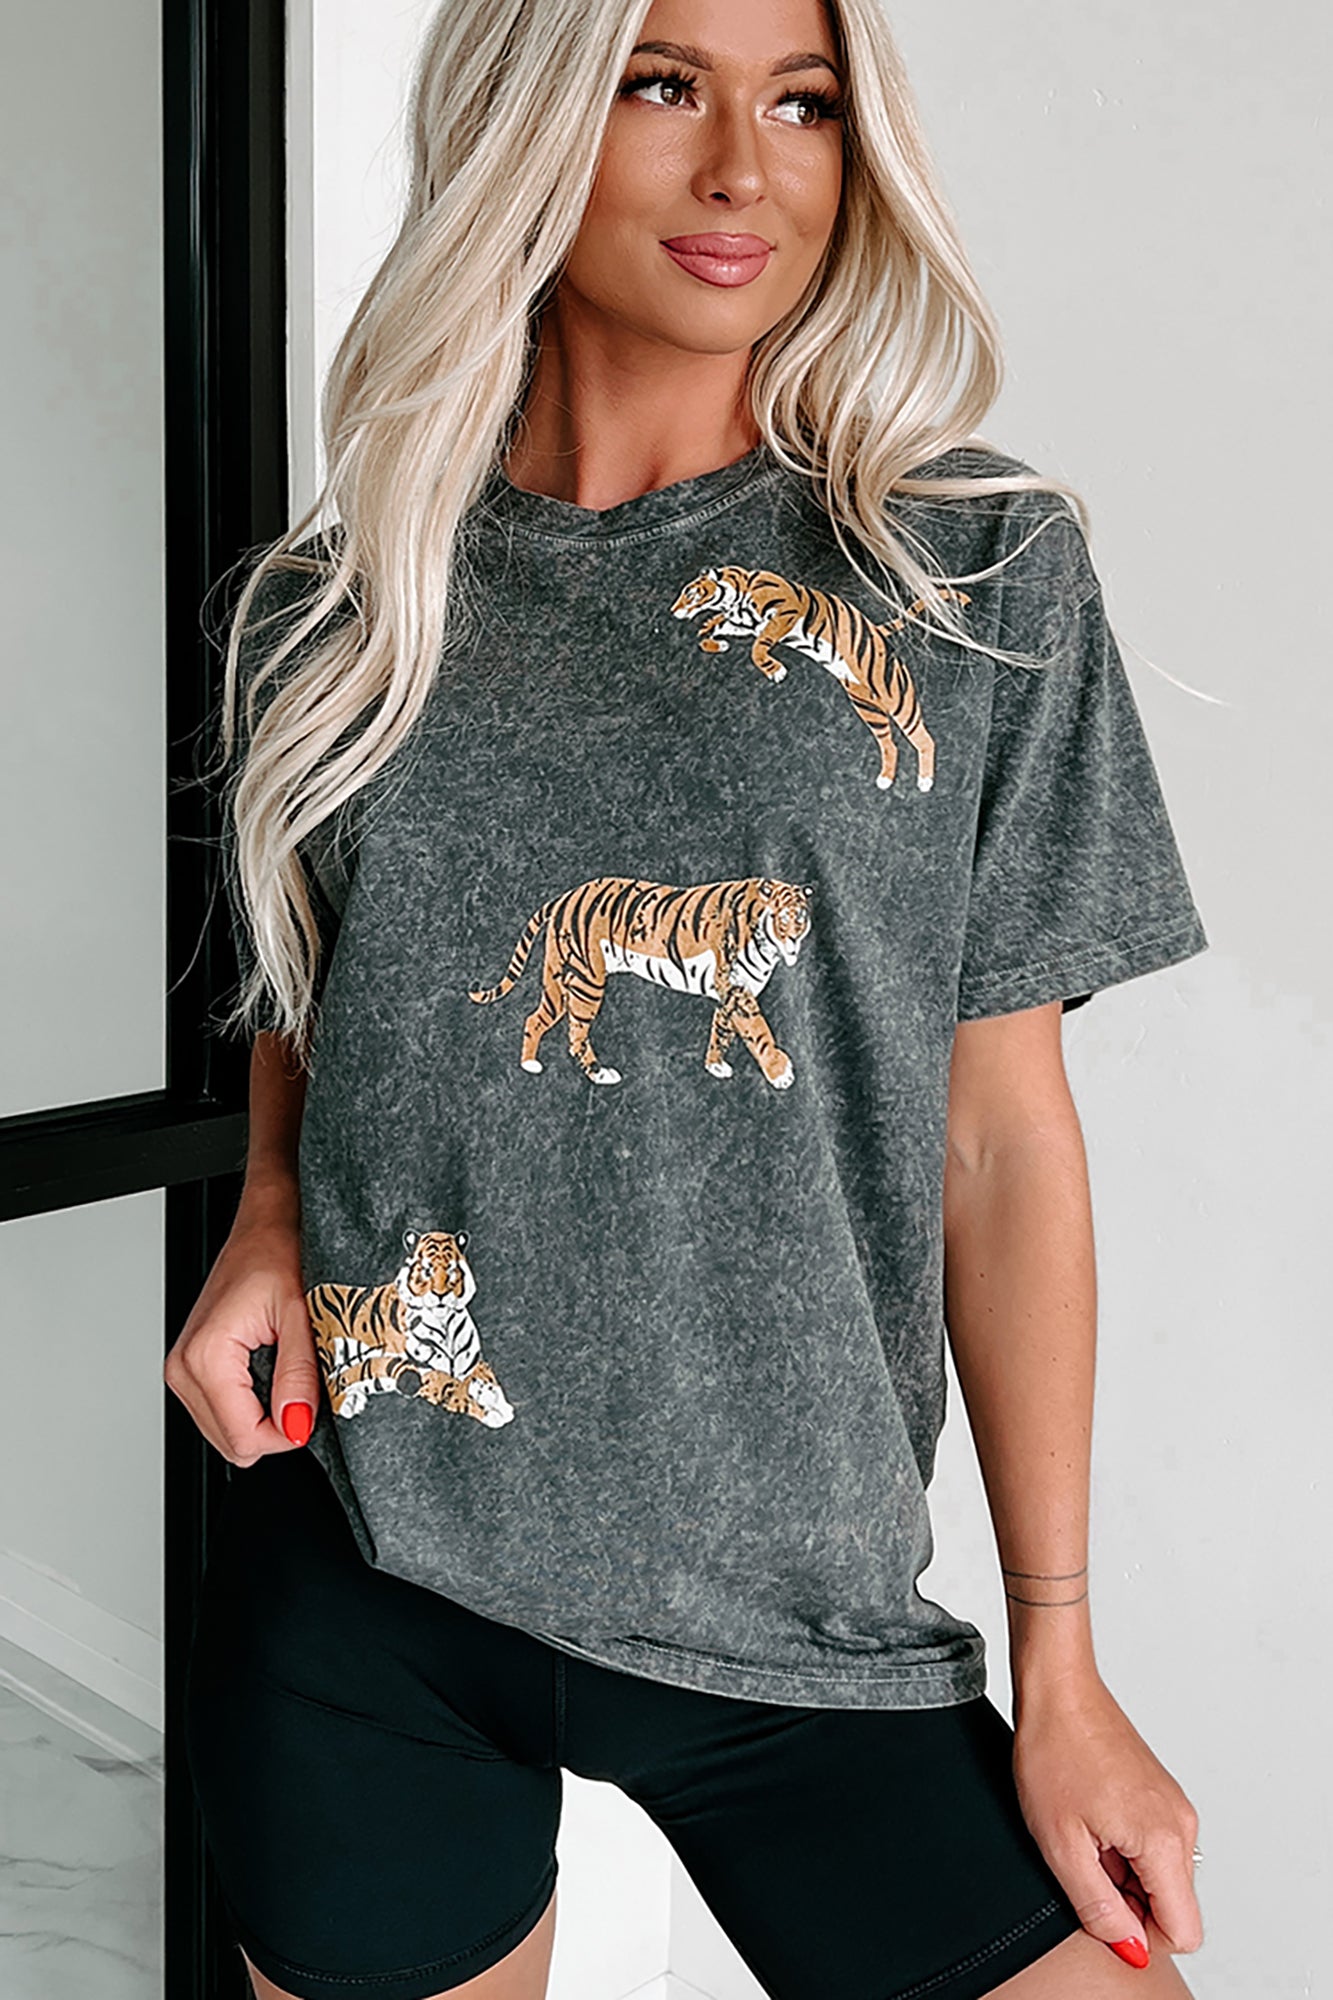 Law Of The Jungle Mineral Wash Tiger Graphic T-Shirt (Charcoal) - NanaMacs